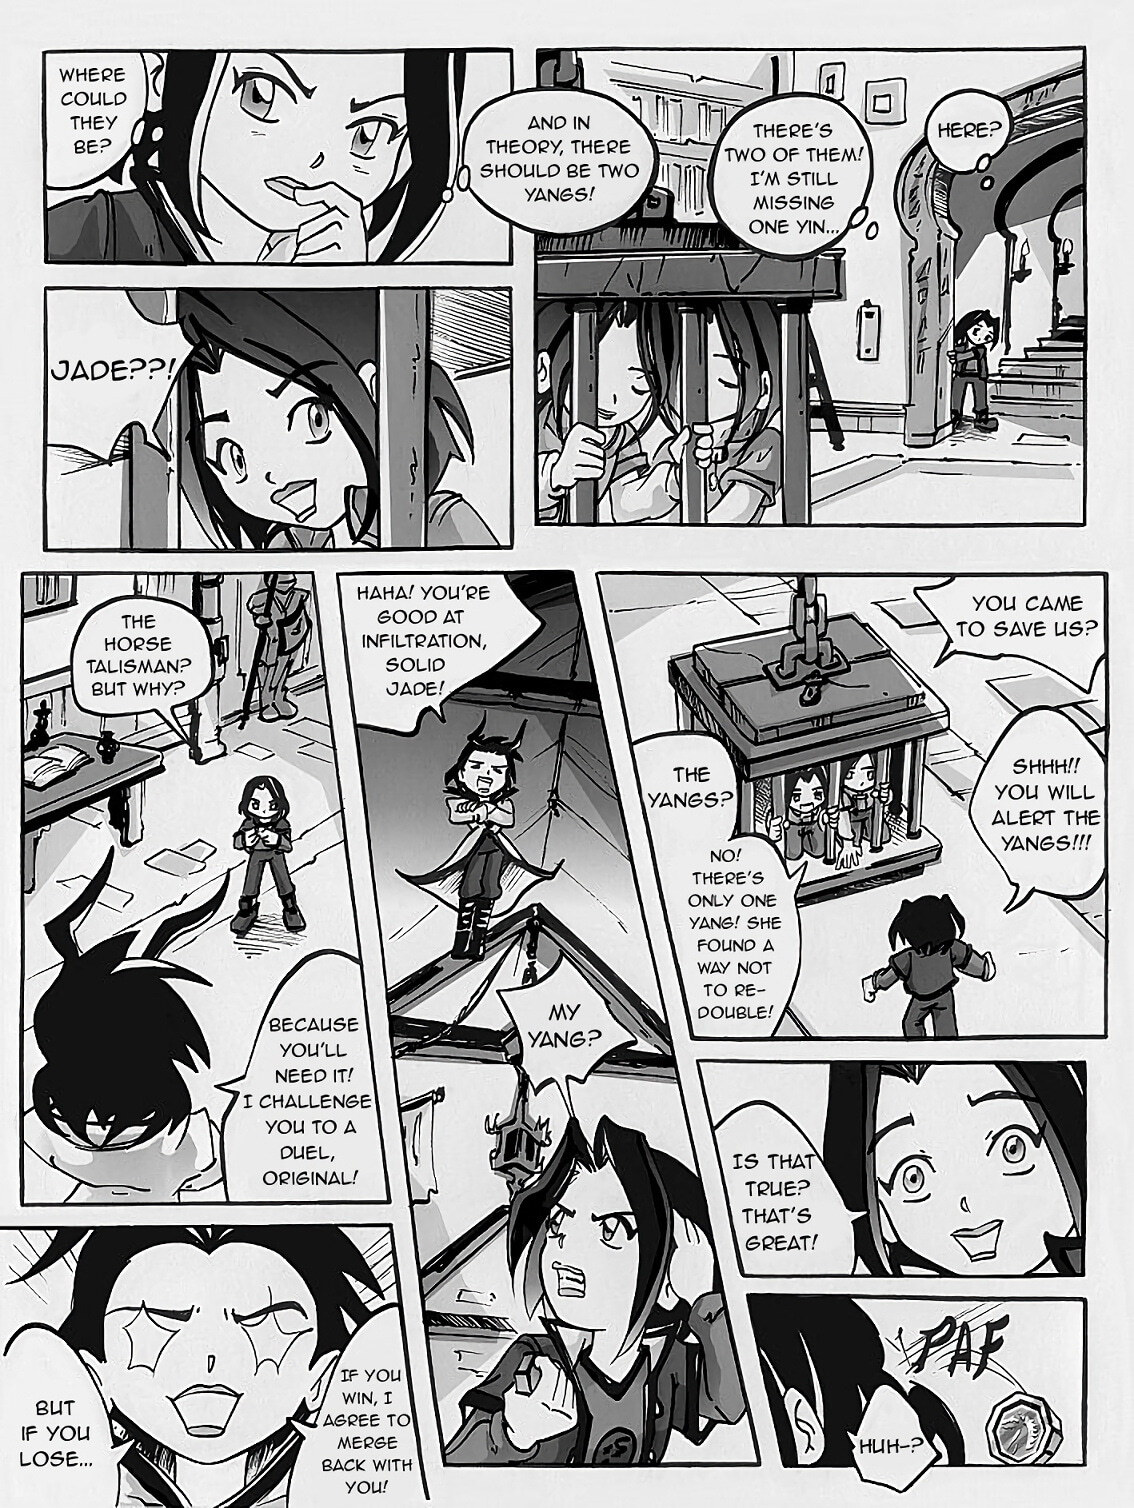 Jade Adventure - Page 70